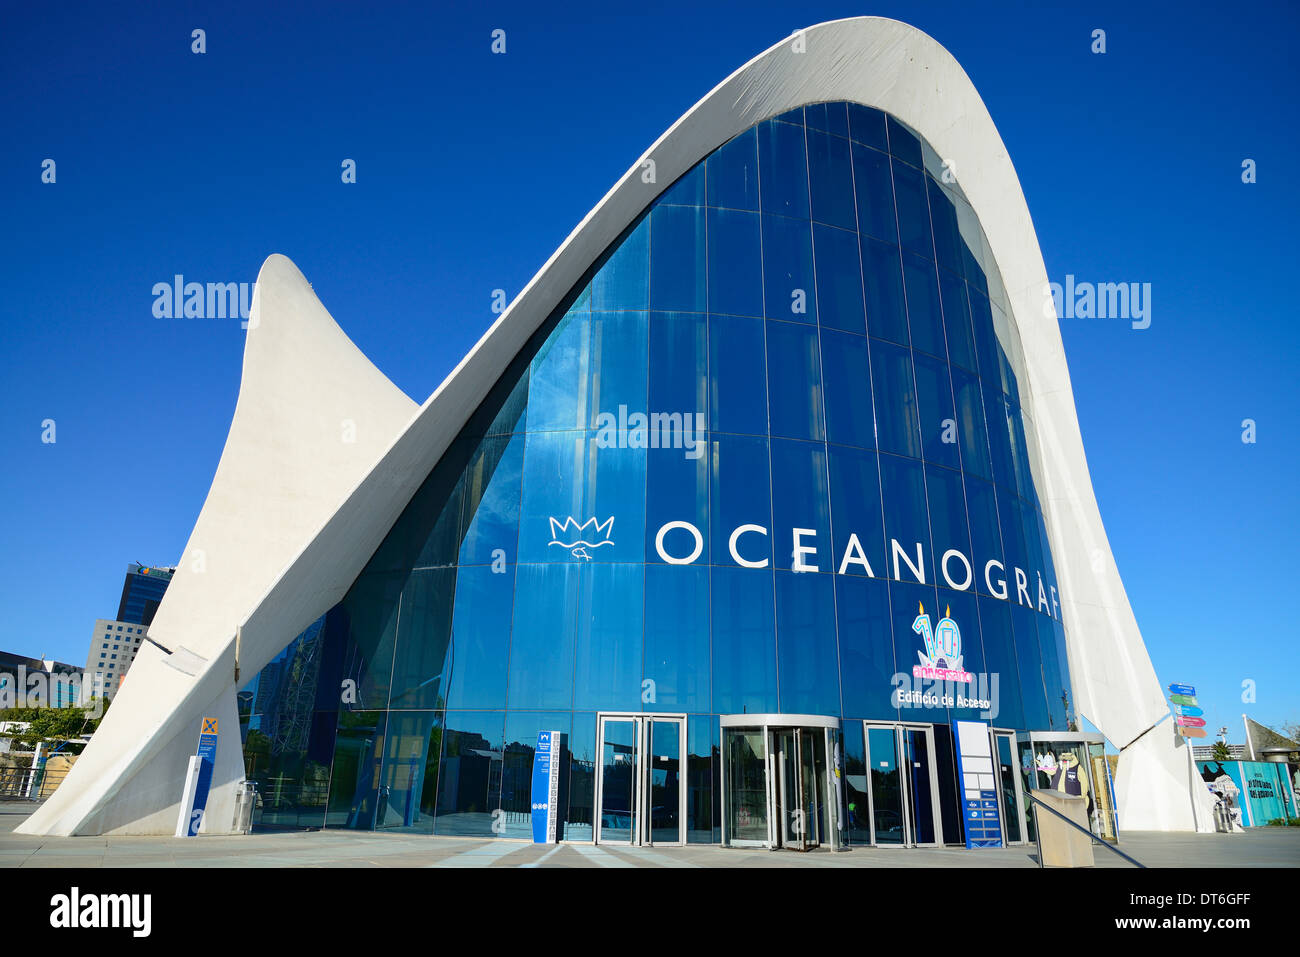 Spagna, Valencia, La Ciudad de las Artes y las Ciencias Città delle Arti e delle scienze facciata oceanografico, il più grande acquario in Europa Foto Stock